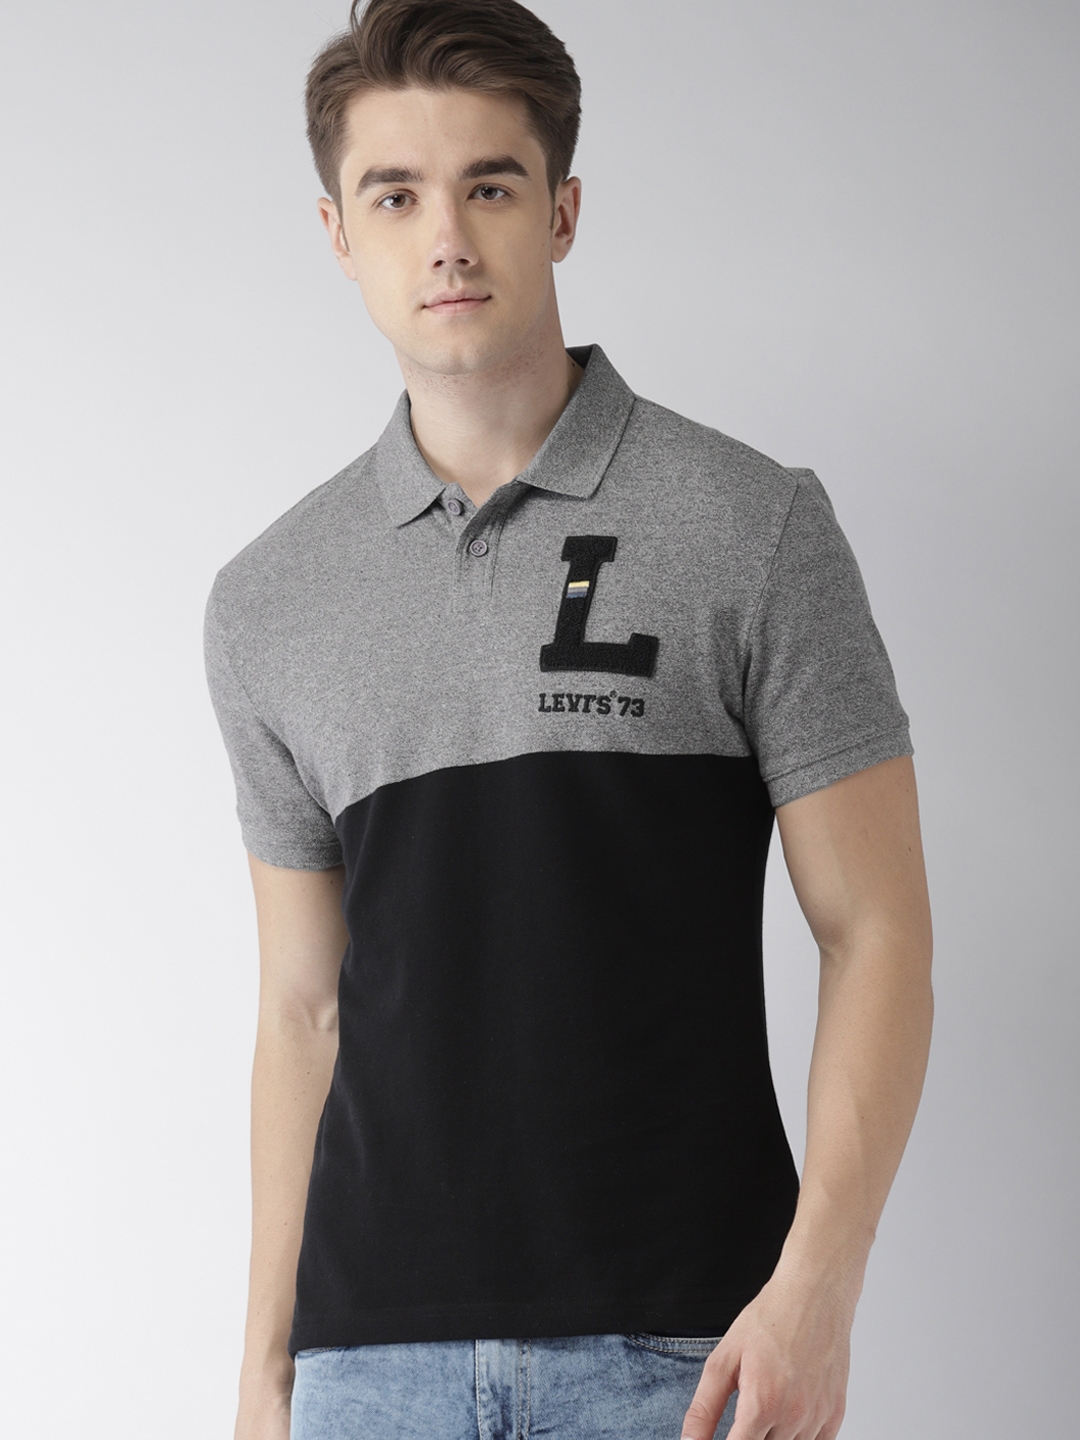 levis black polo t shirt